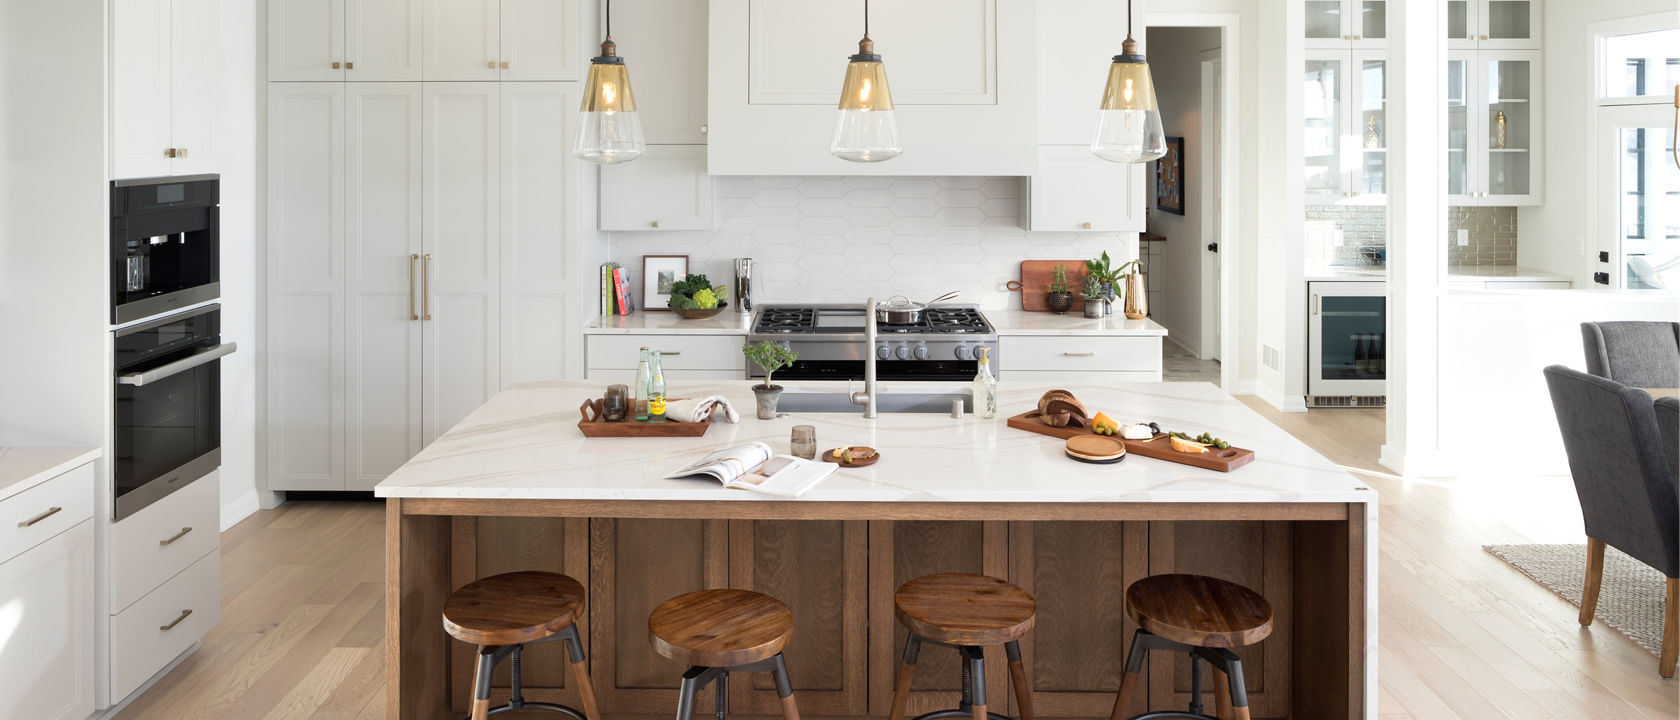 A warm kitchen with a counter and island featuring Cambria Brittanicca Warm quartz countertops.